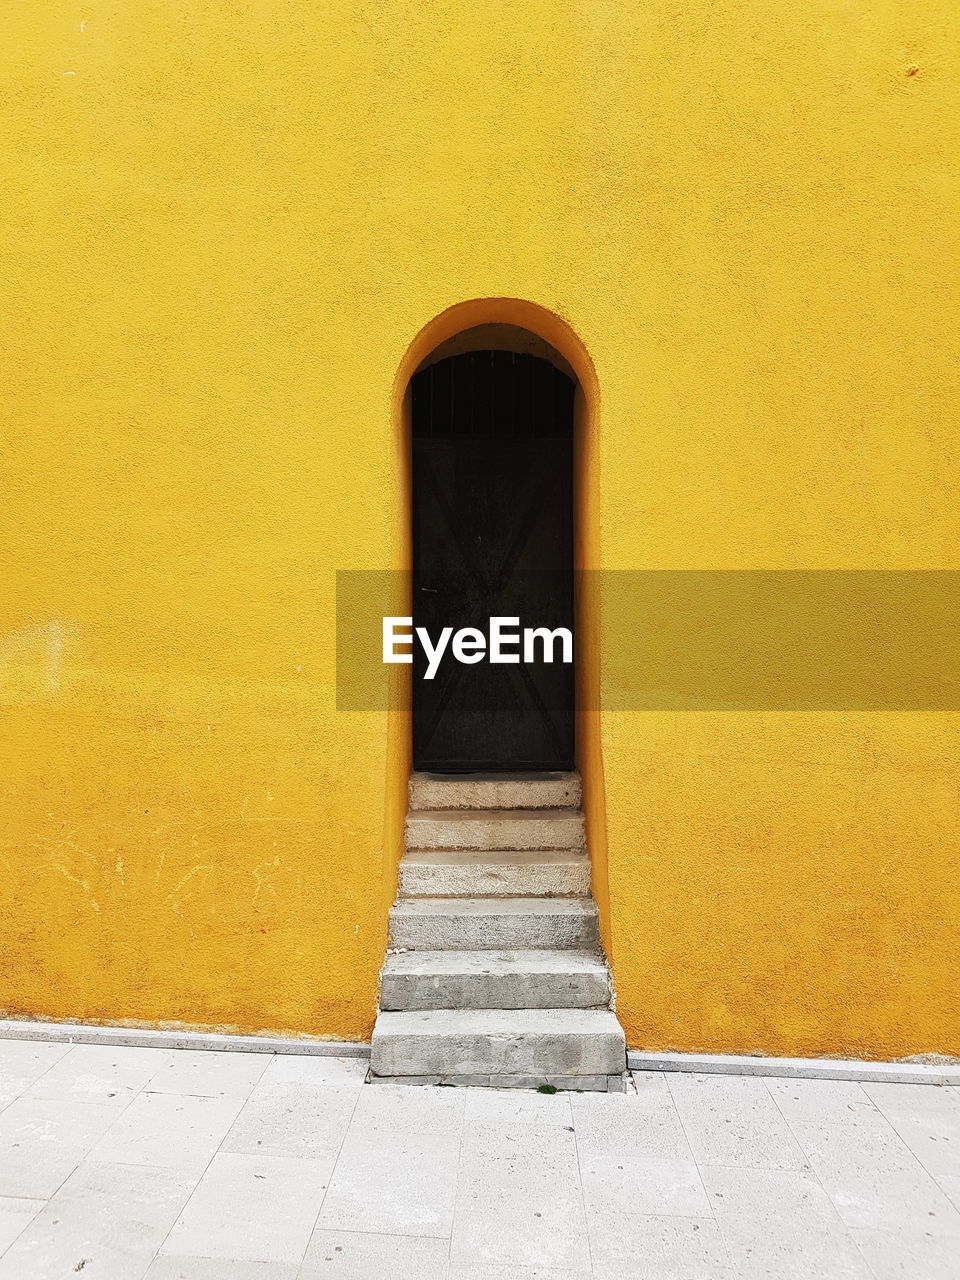 Minimalist doorway on a yellow building.